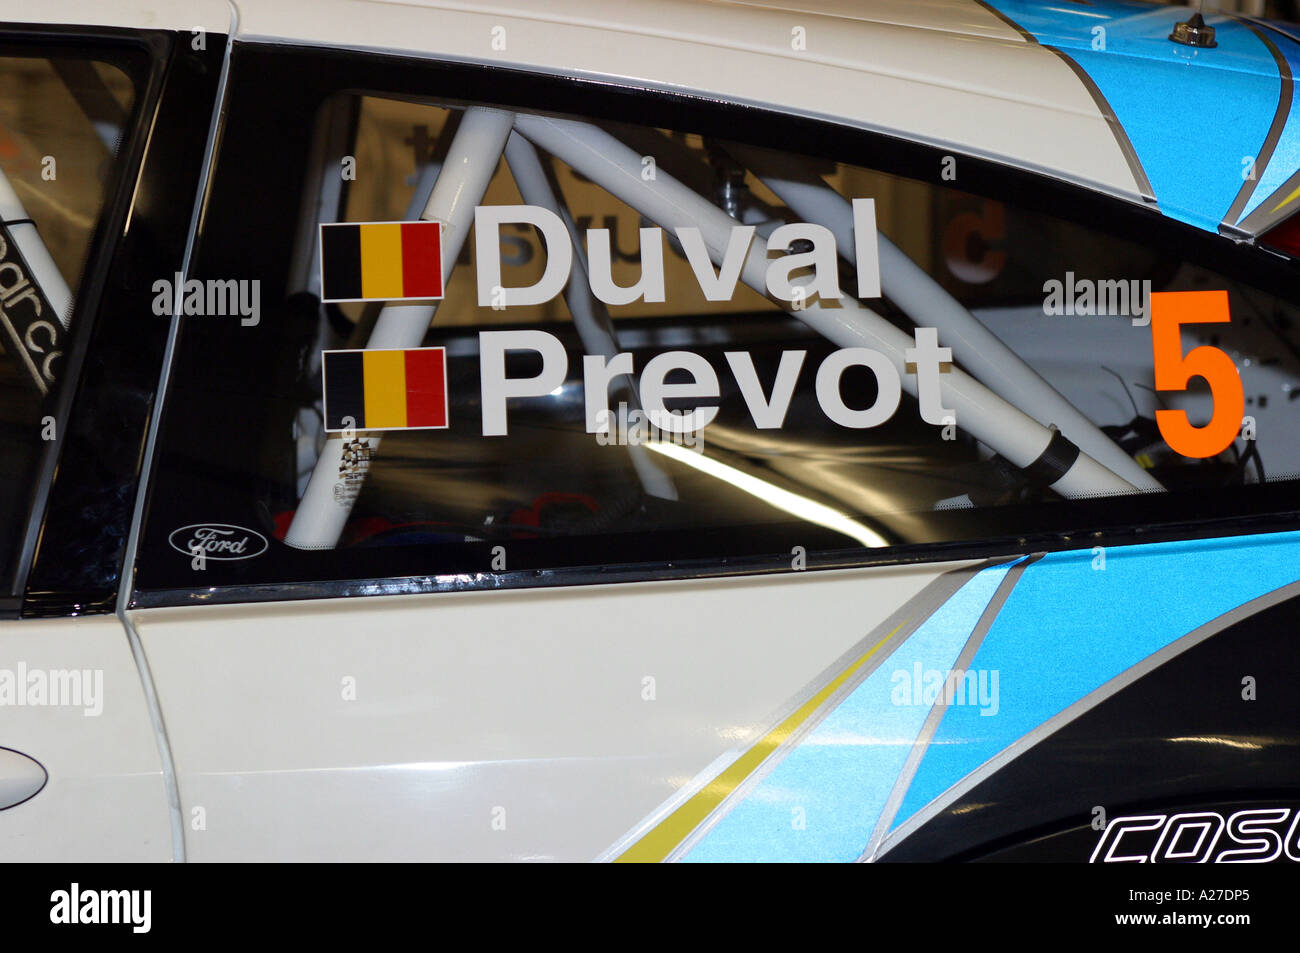 Francois Duval e Nicholas Prevot Ford Focus WRC Foto Stock